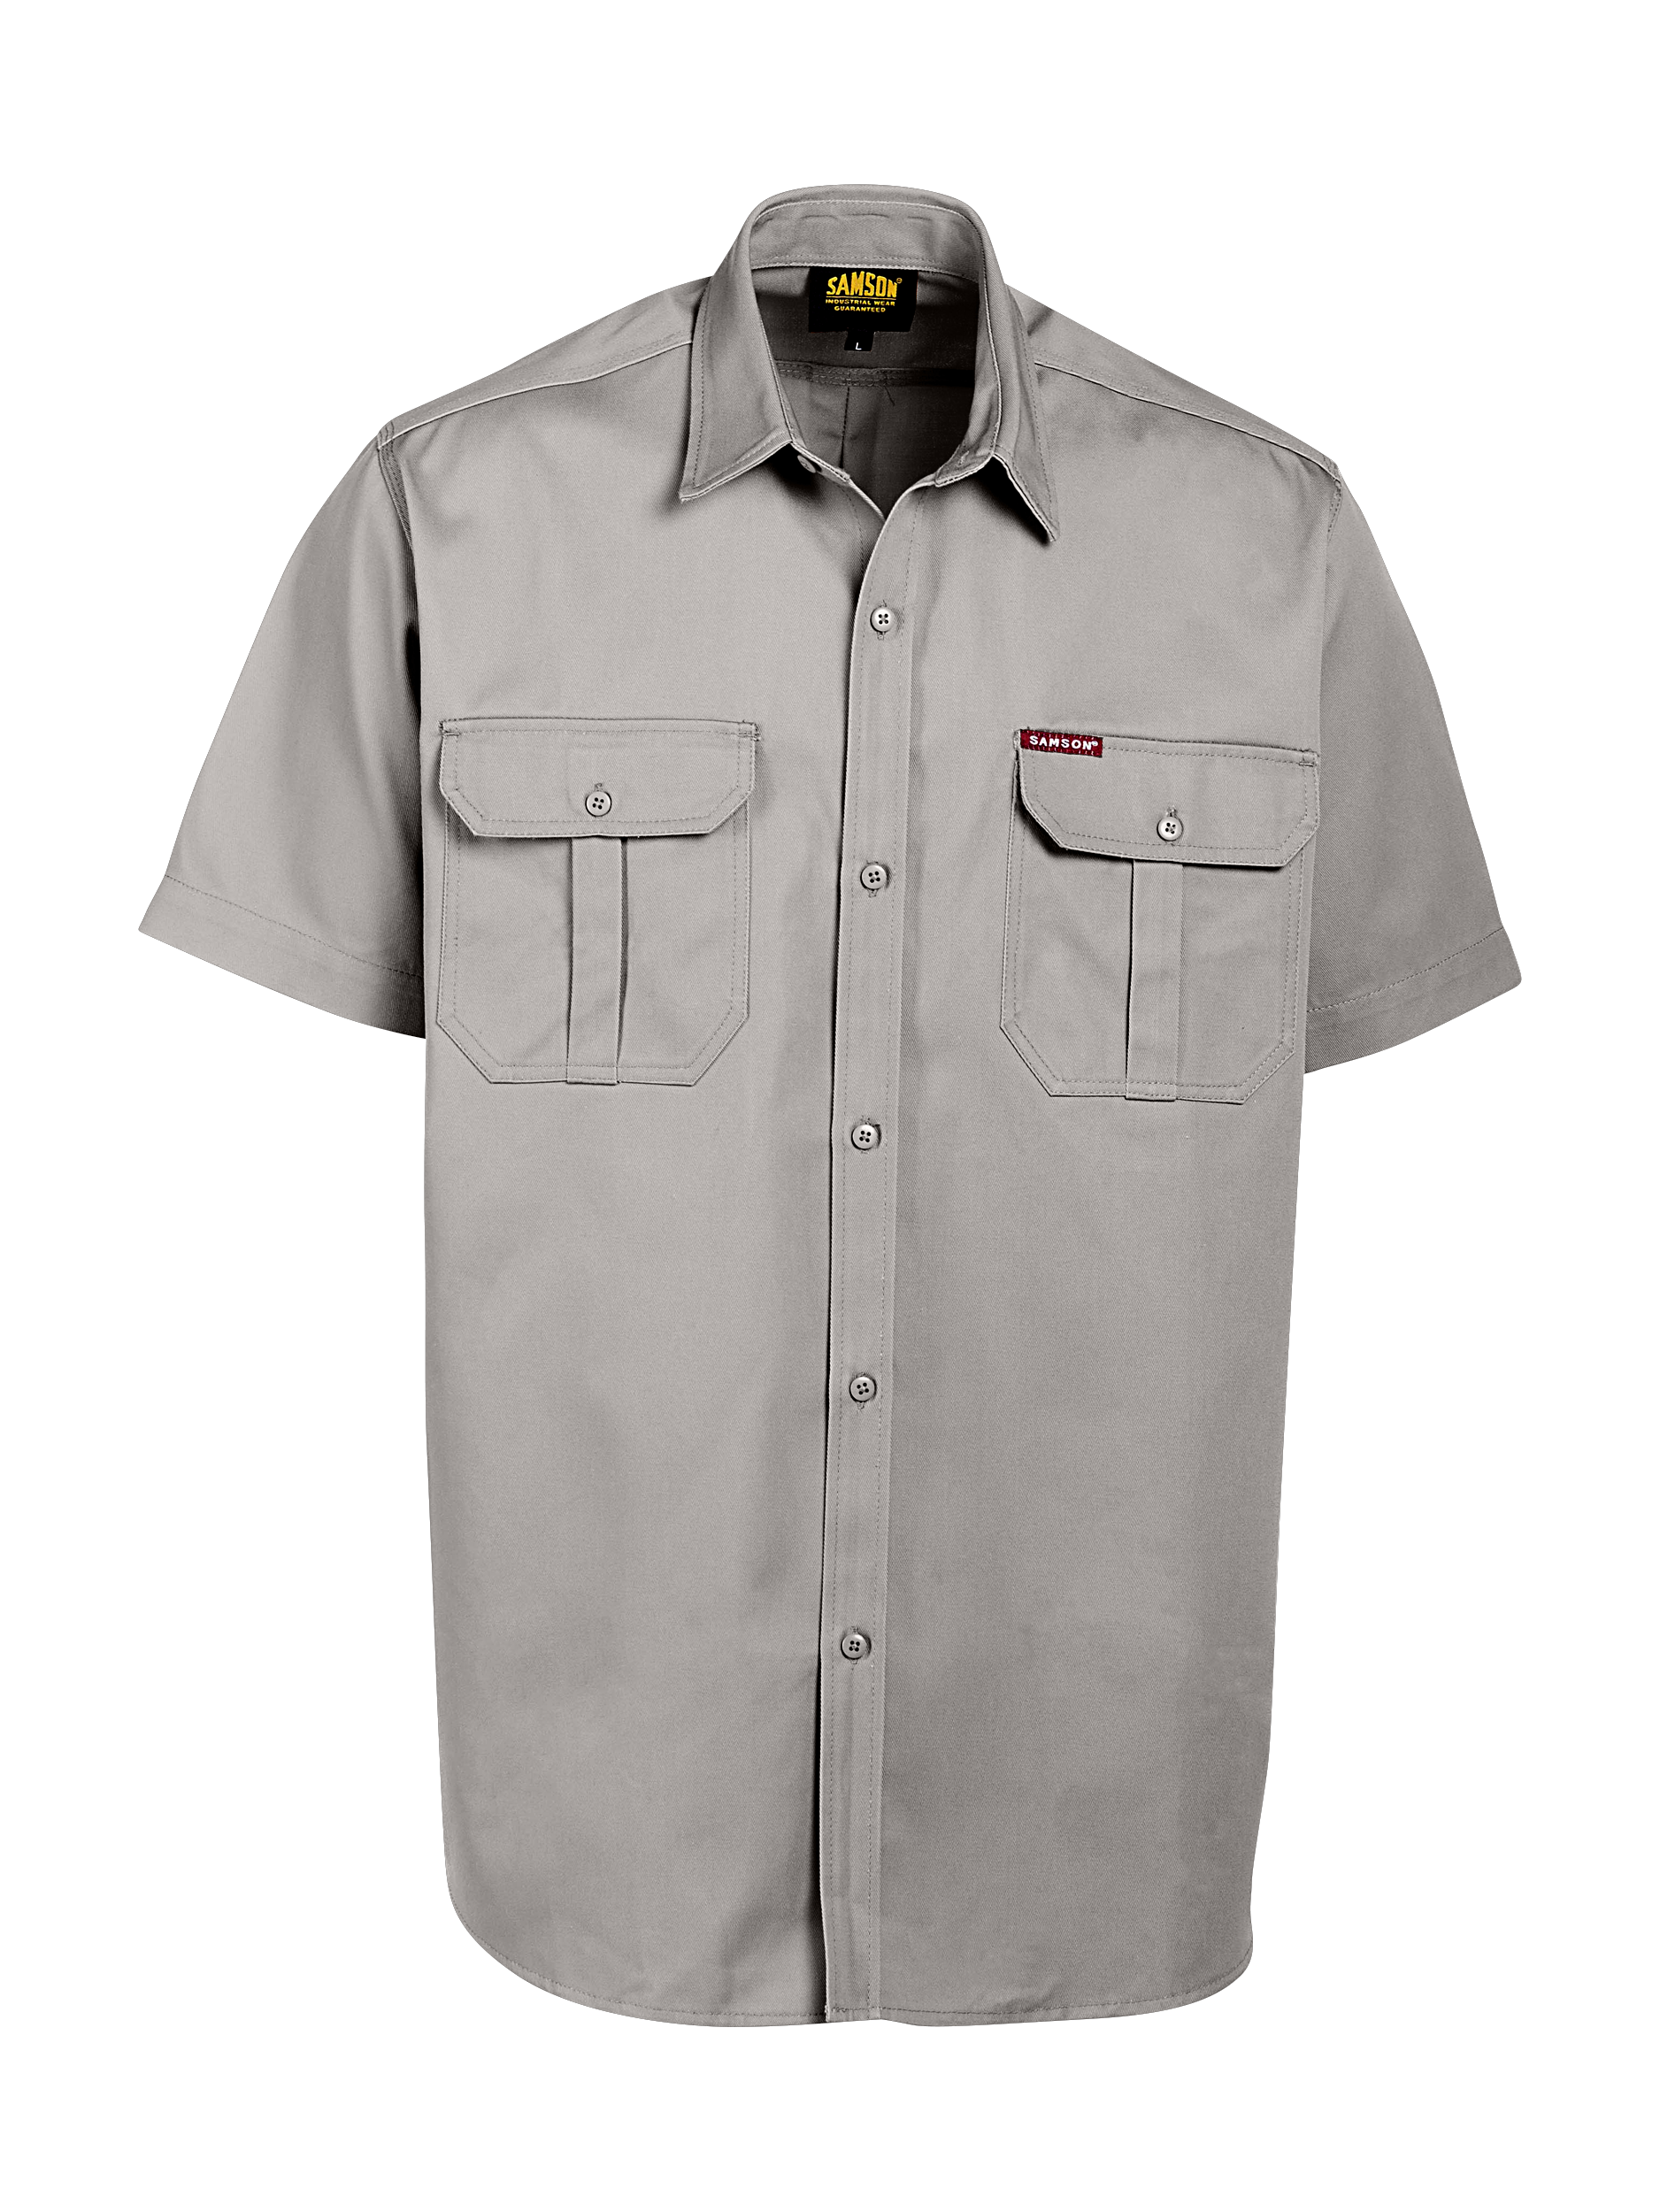 Samson - Workwear - Mens Short Sleeve Workwear Shirt